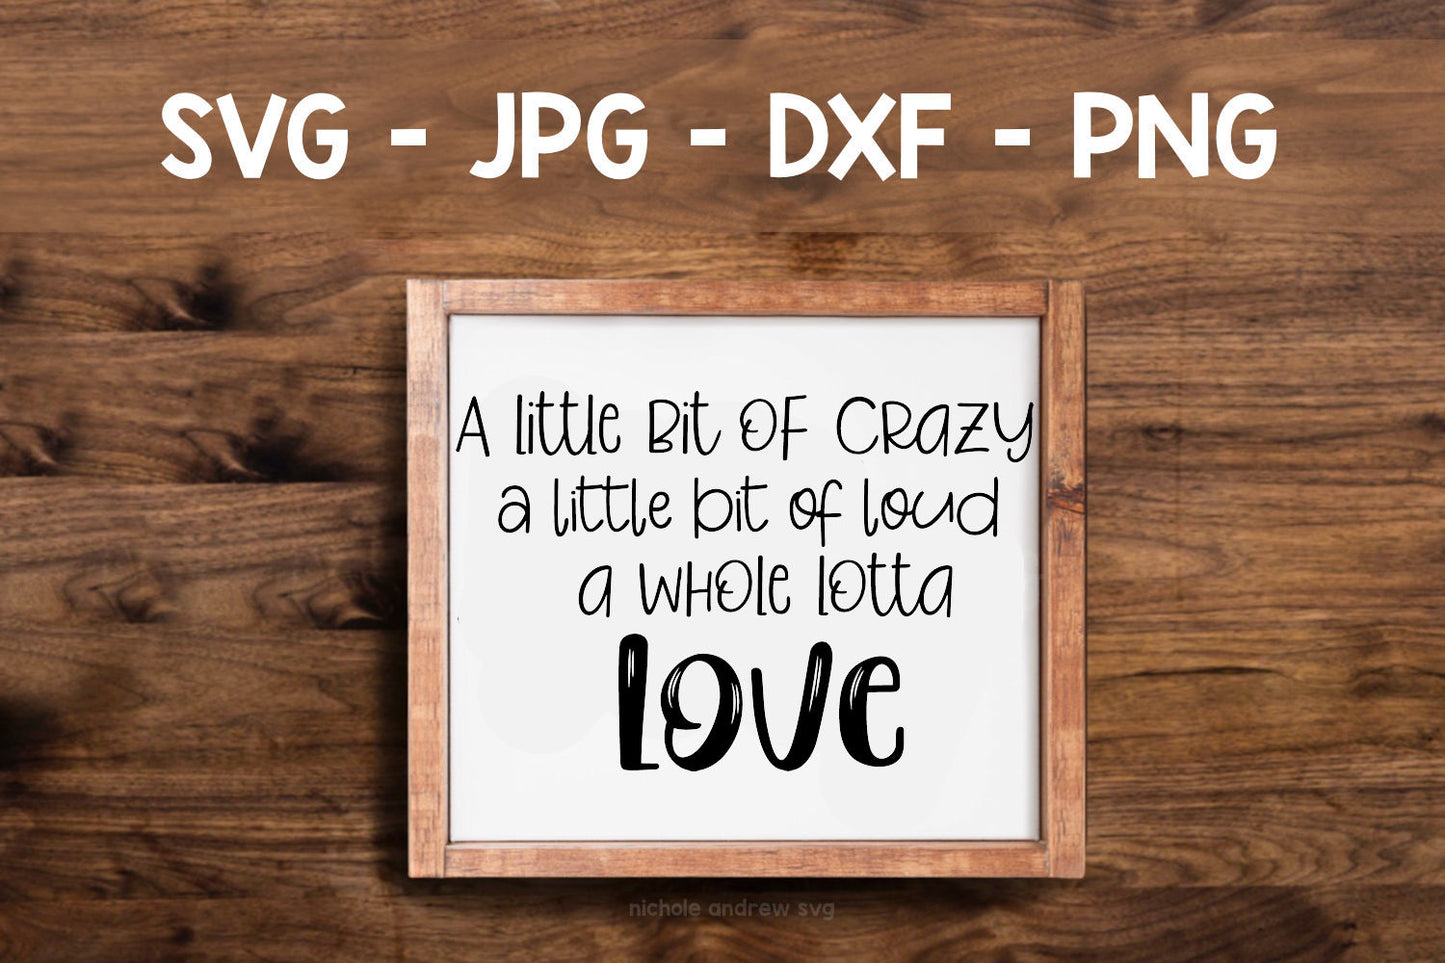 Whole Lotta Love - SVG Cut File